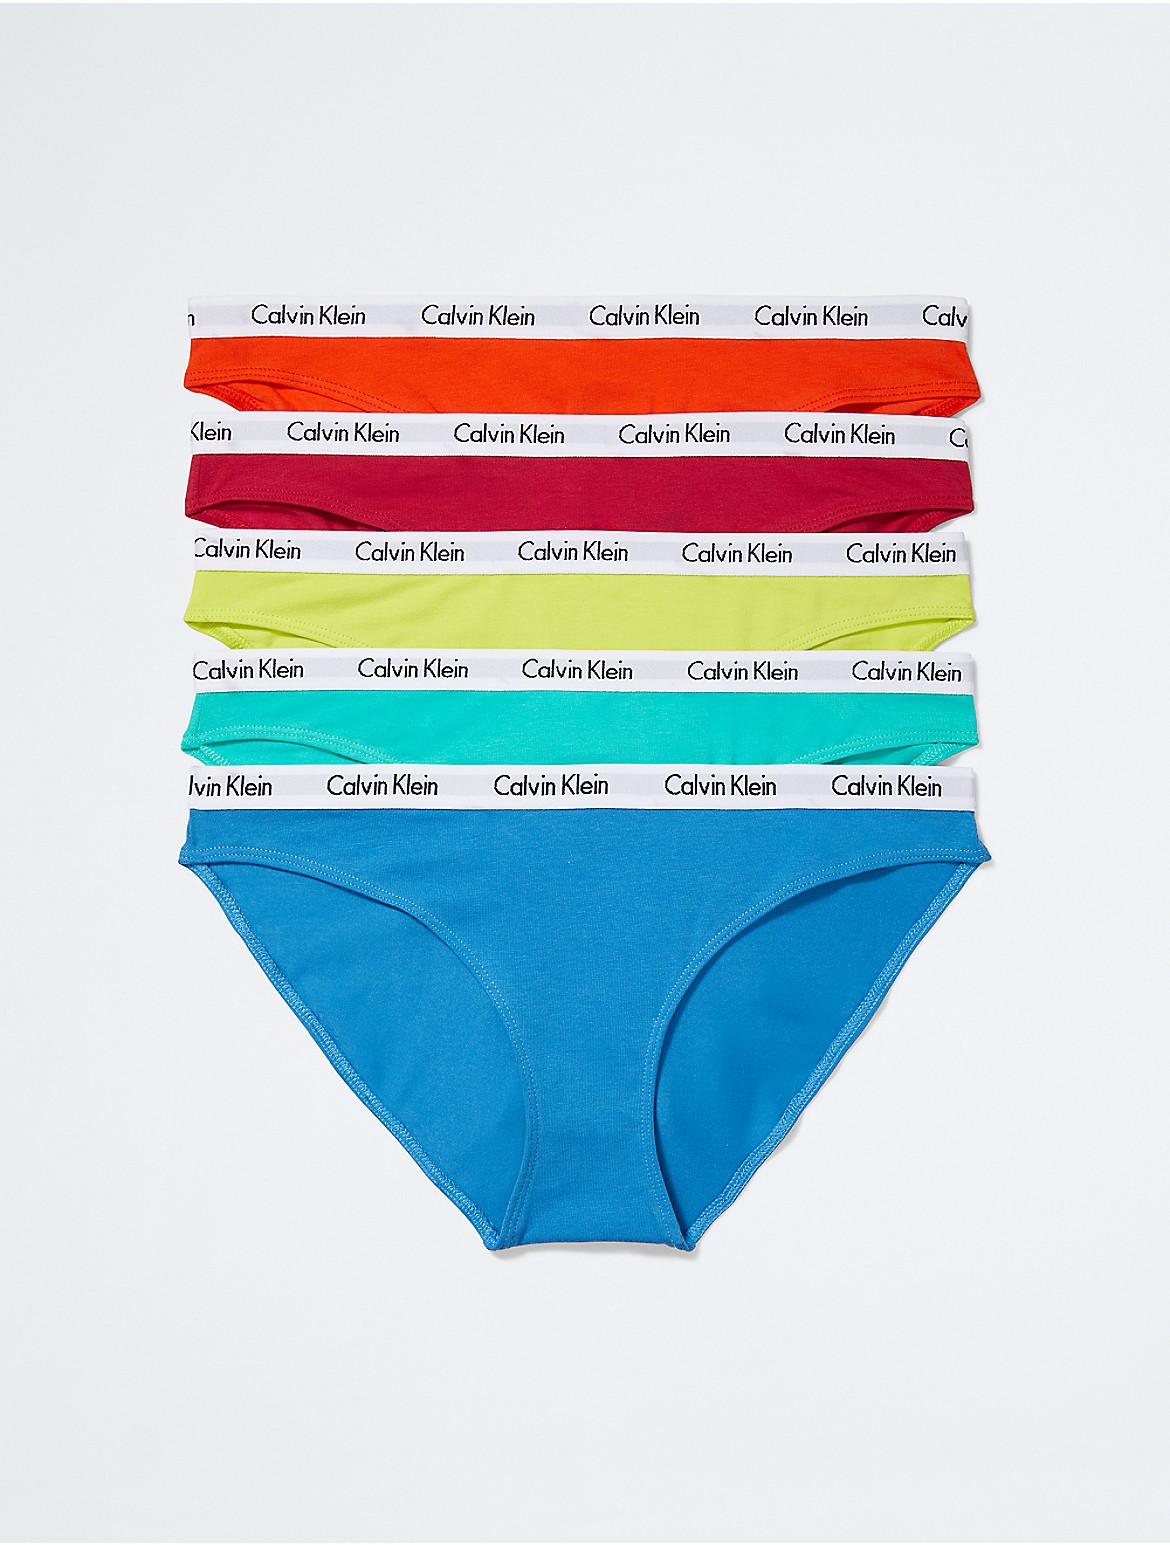 Calvin Klein Women's Pride Carousel Logo Cotton 5-Pack Bikini - Multi - S